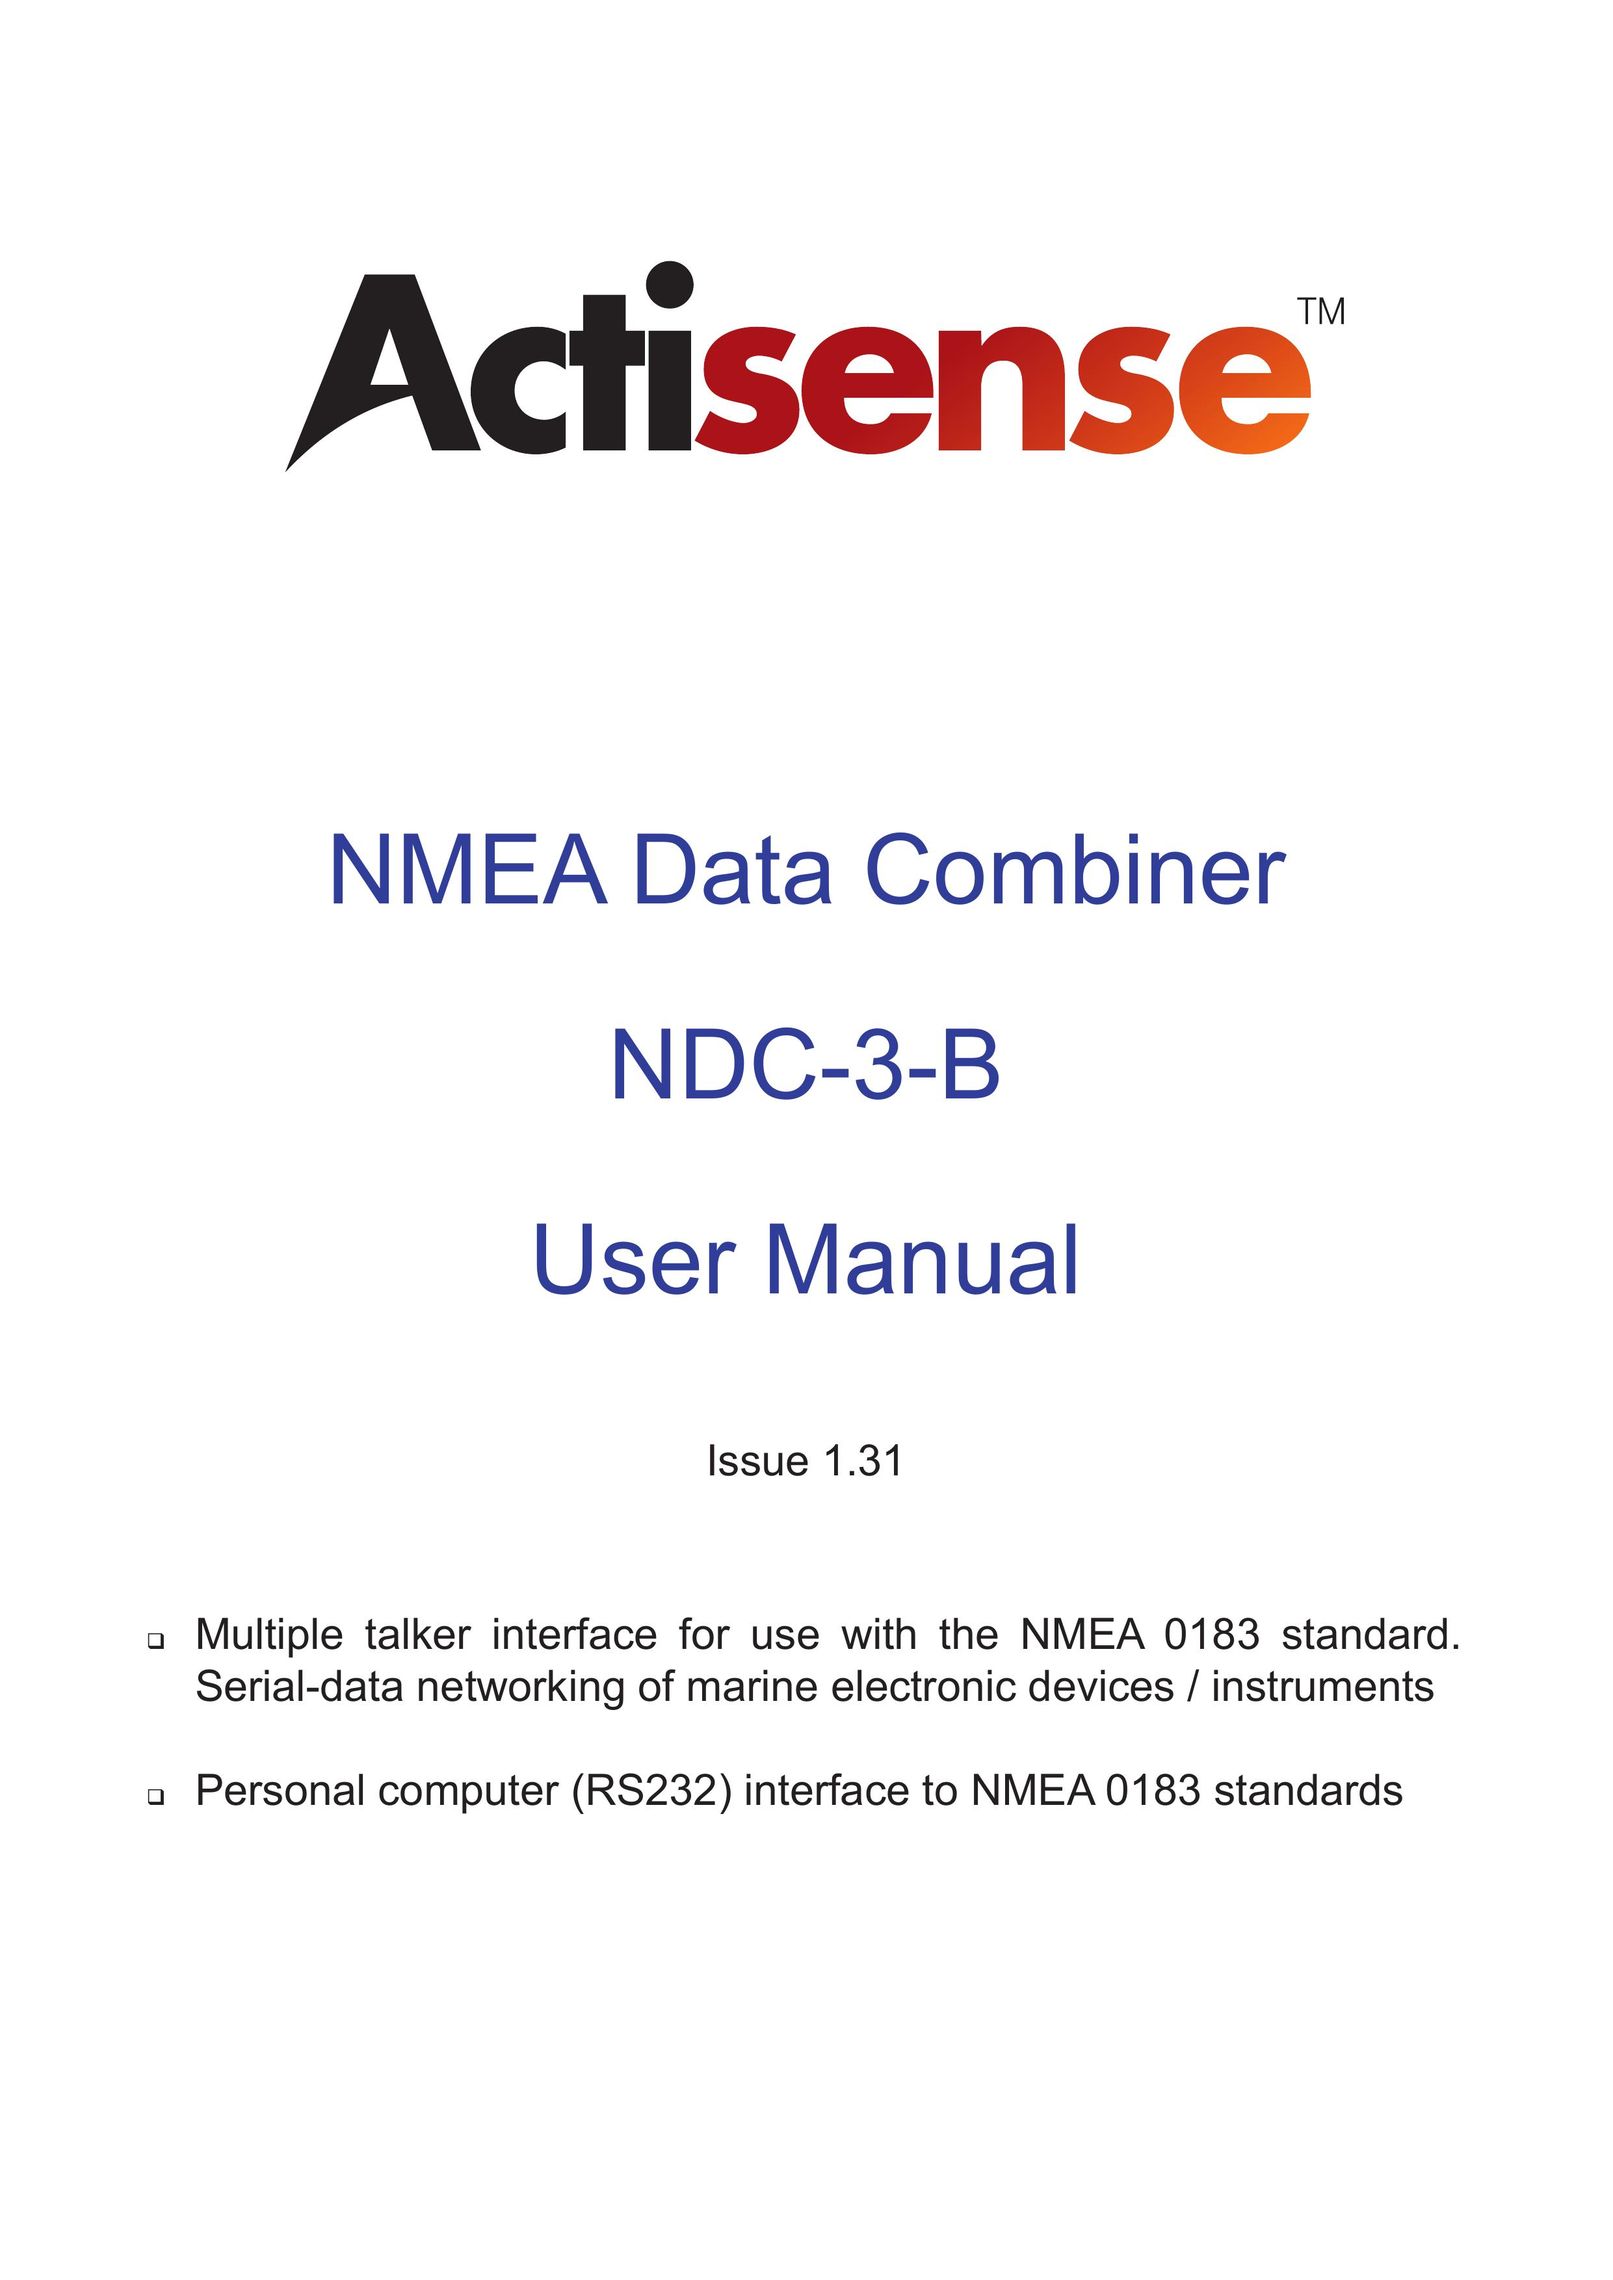 NDC comm NDC-3 Network Card User Manual